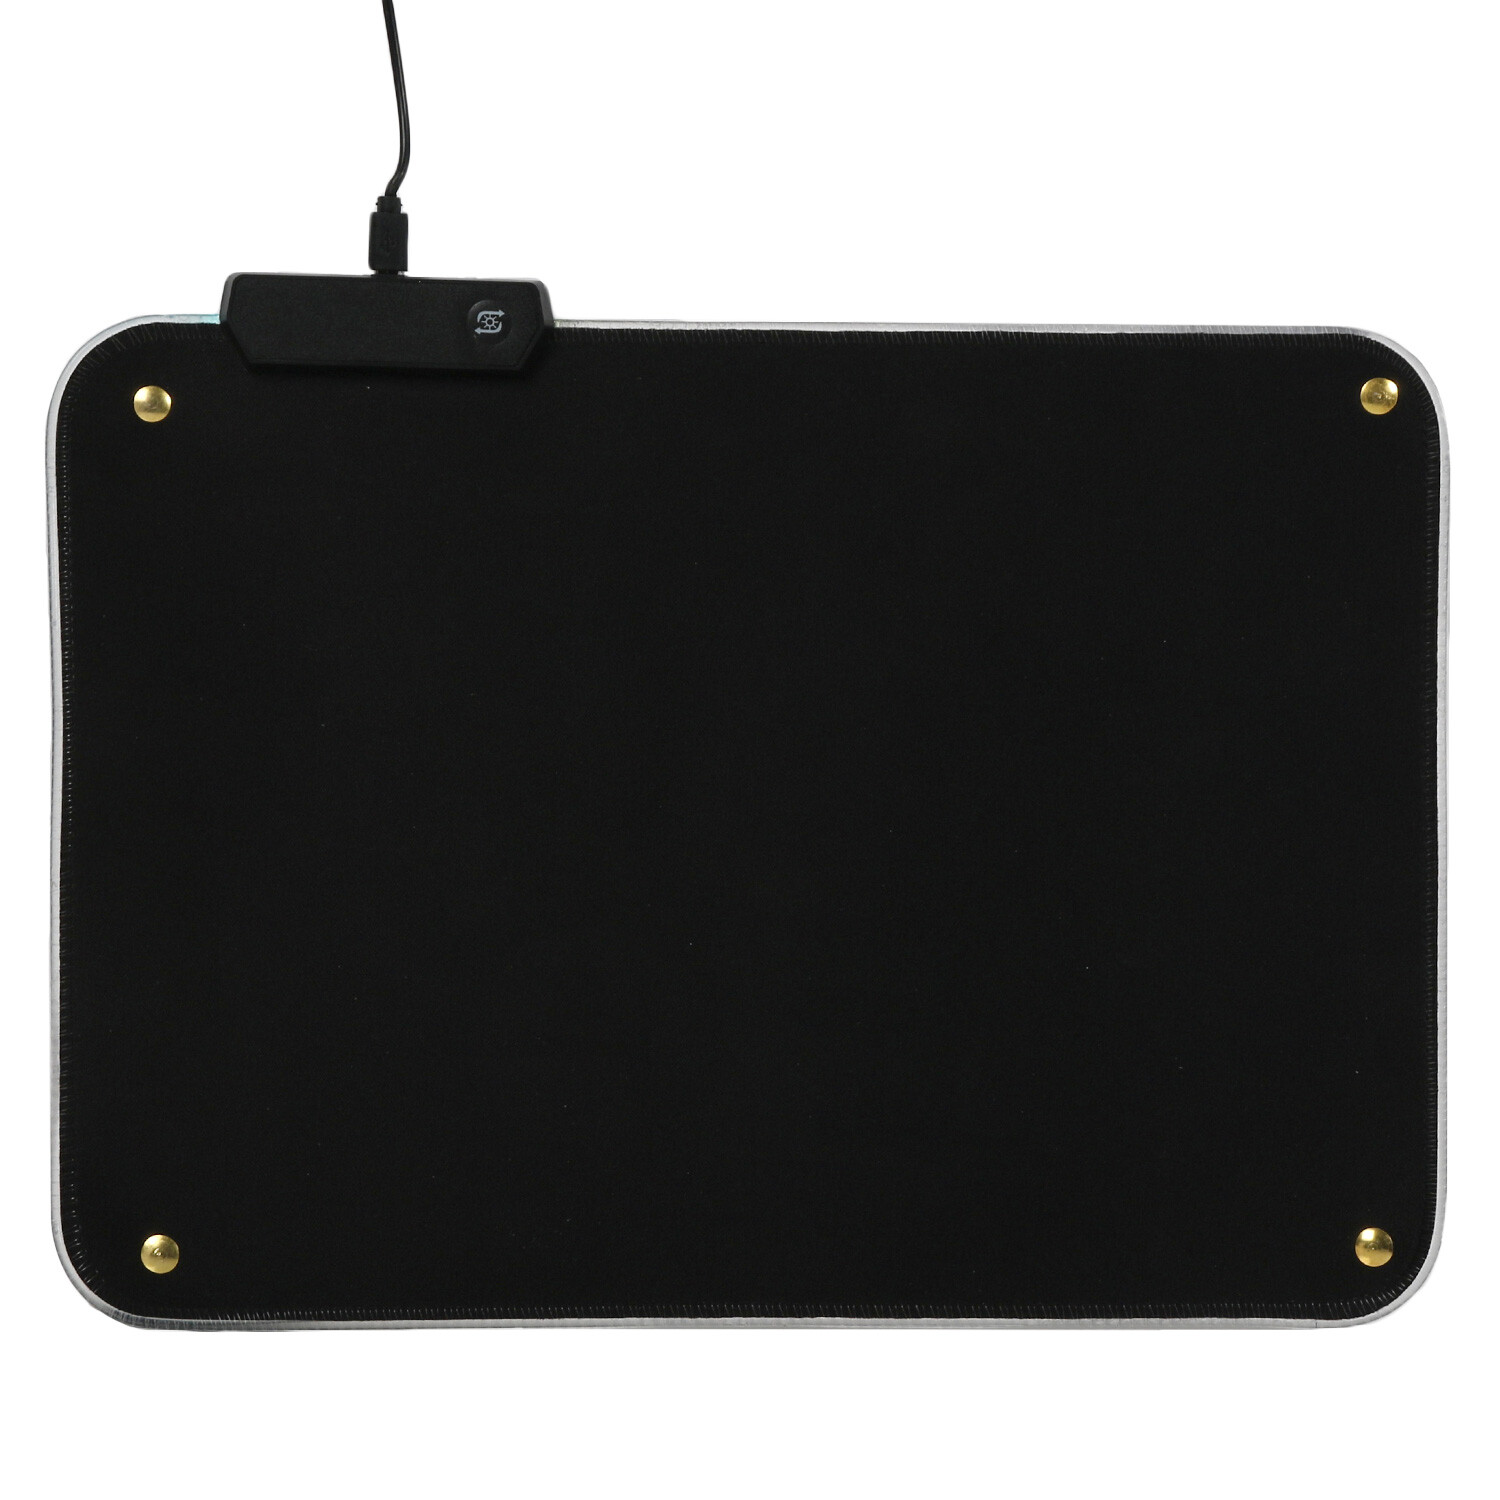 Black LED Gaming Mouse Pad Image 1